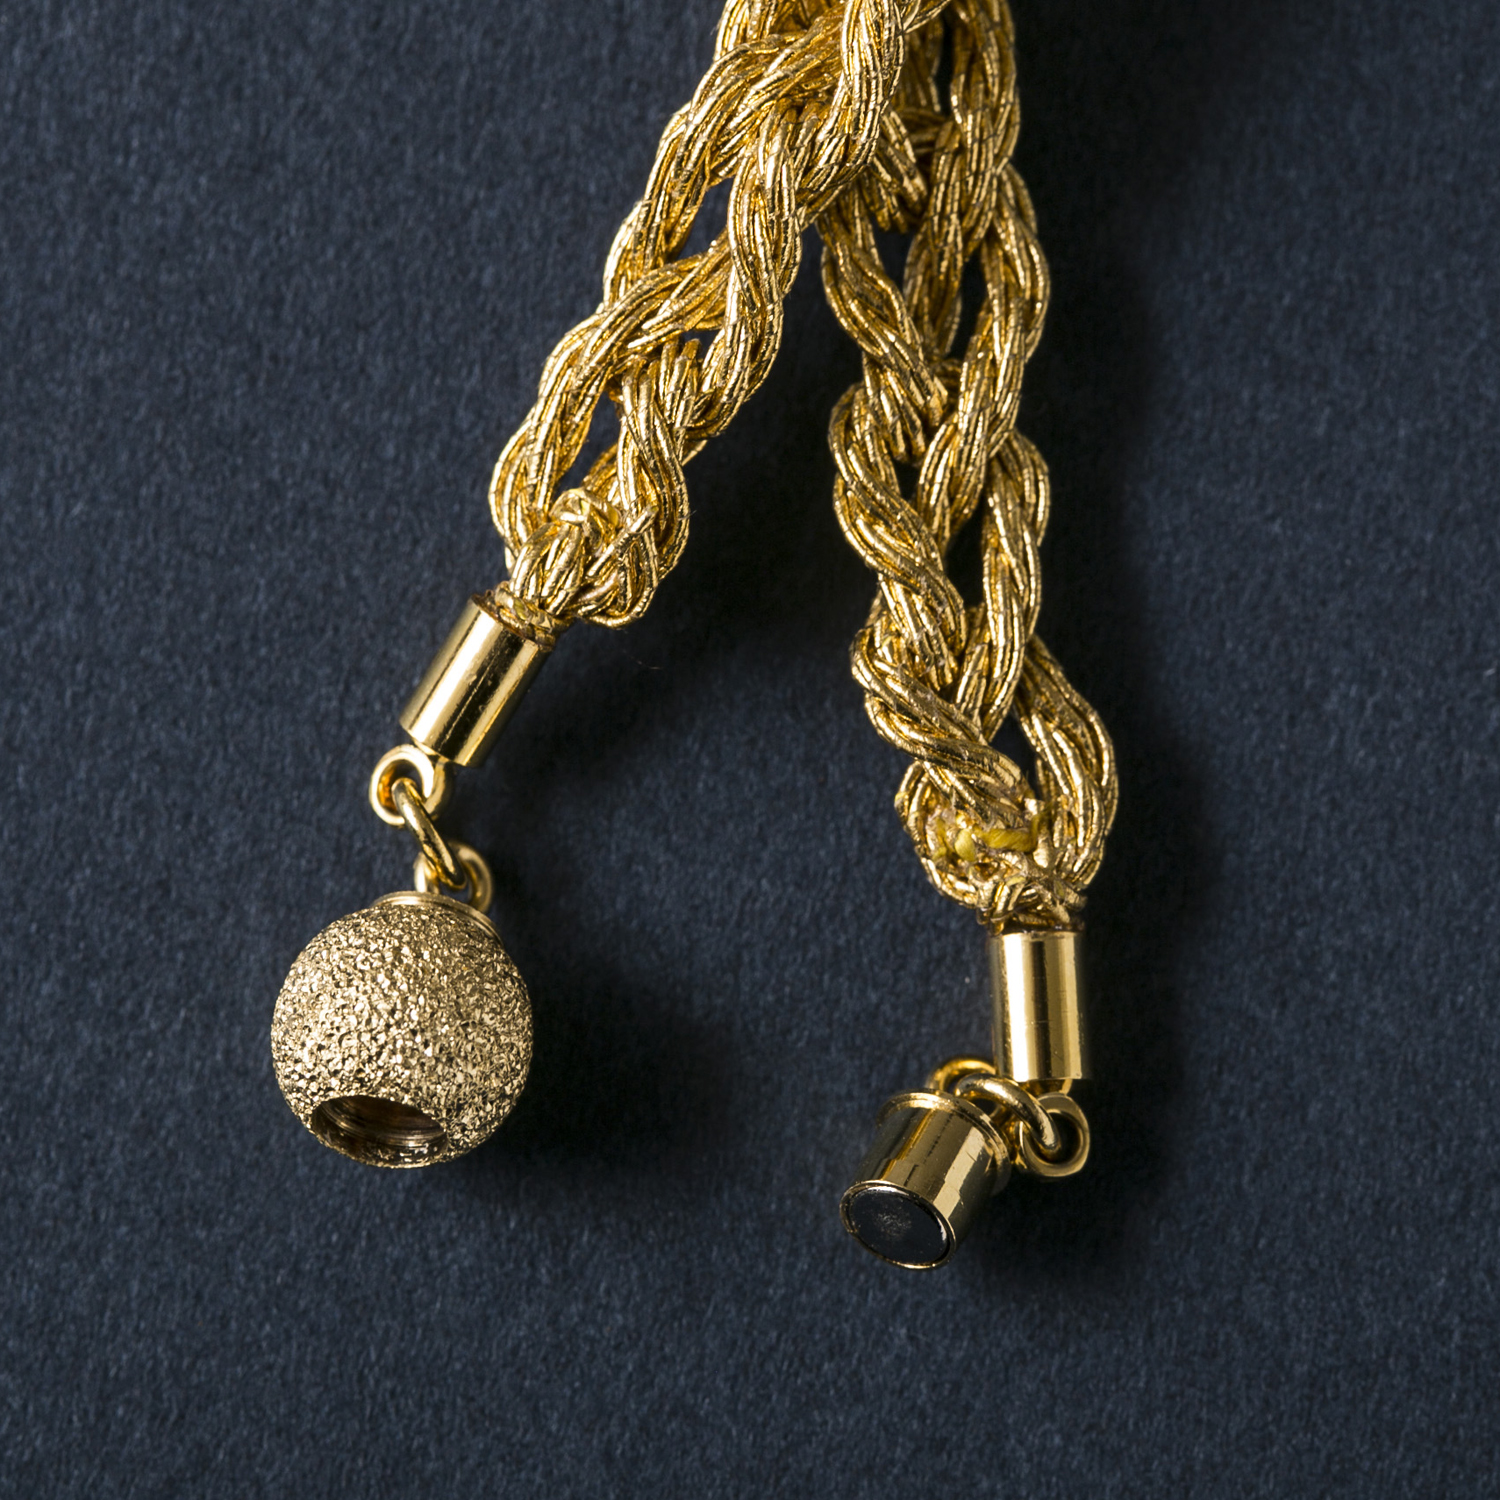 wanoiro/金糸 ネックレス - 軽くて映える、アレンジ自在の金銀糸アクセサリー